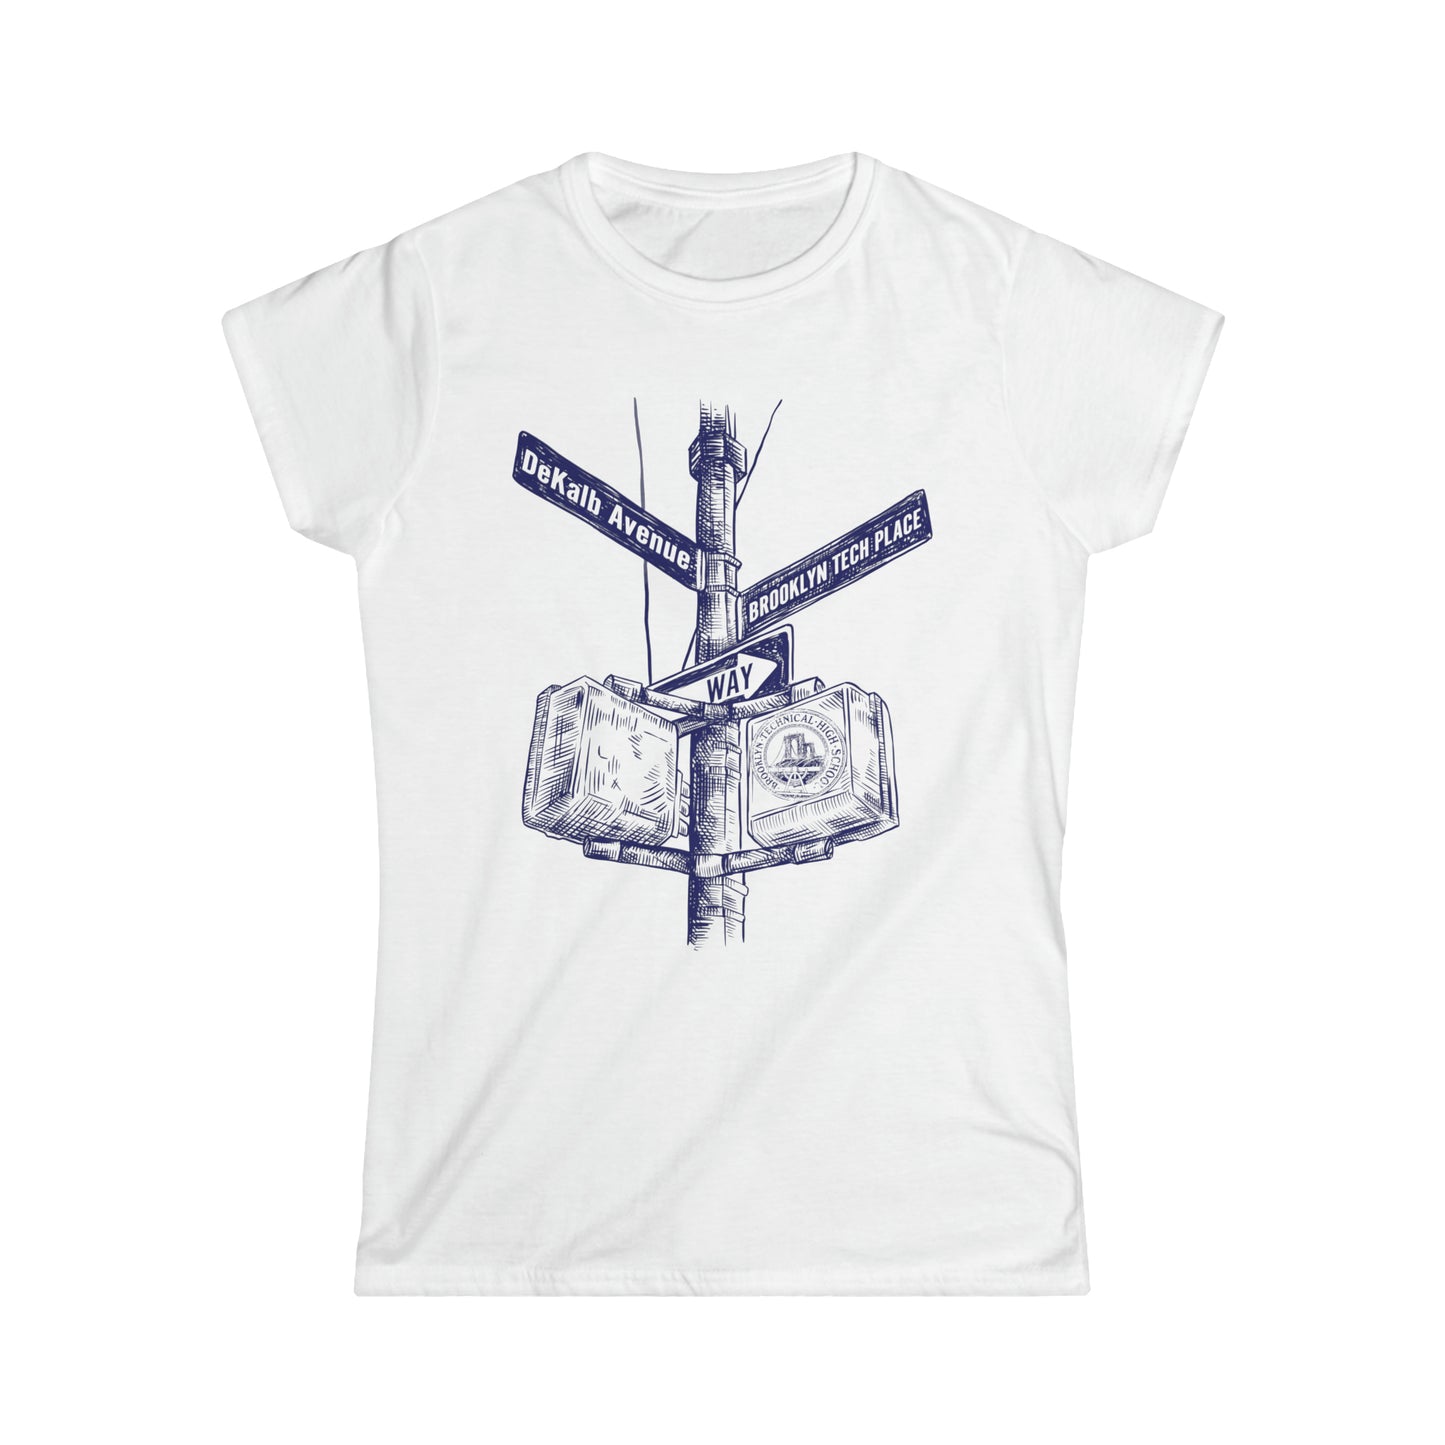 Boutique - Dekalb Ave & Brooklyn Tech Pl - Ladies Softstyle T-Shirt - (blue Graphic)